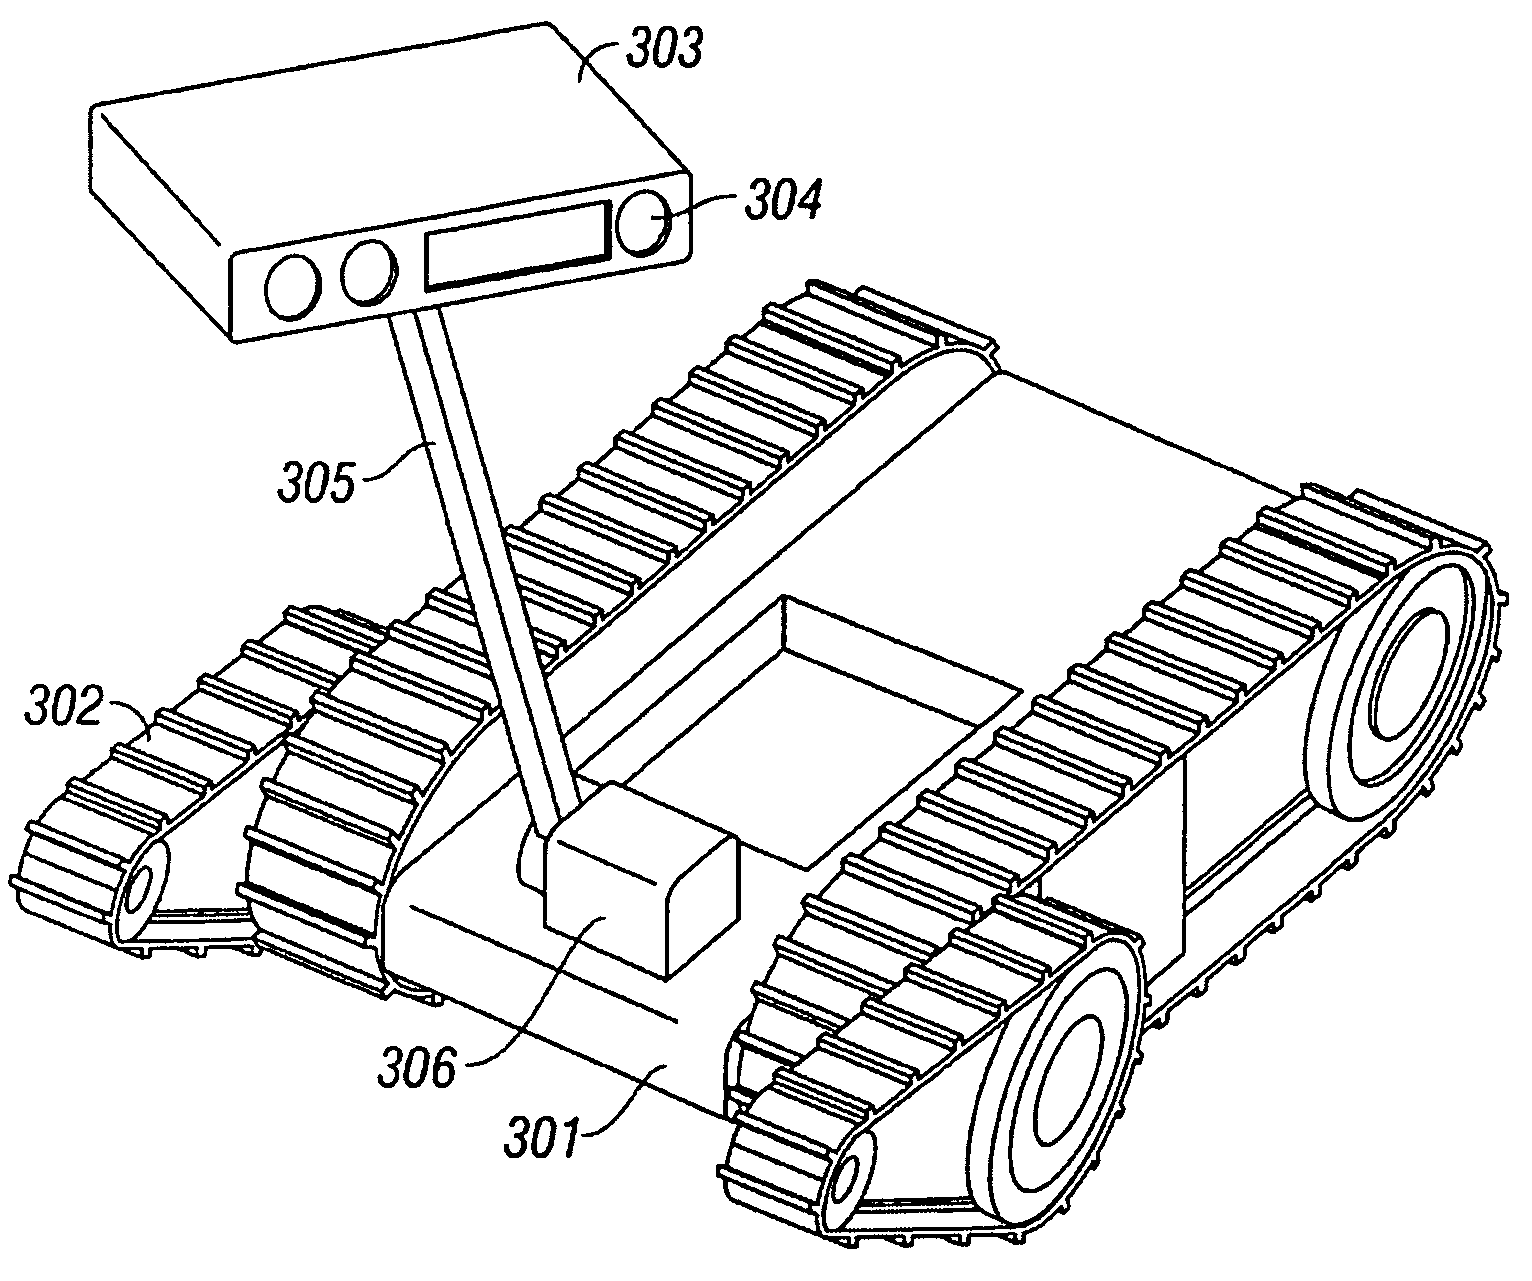 Maneuvering robotic vehicles having a positionable sensor head